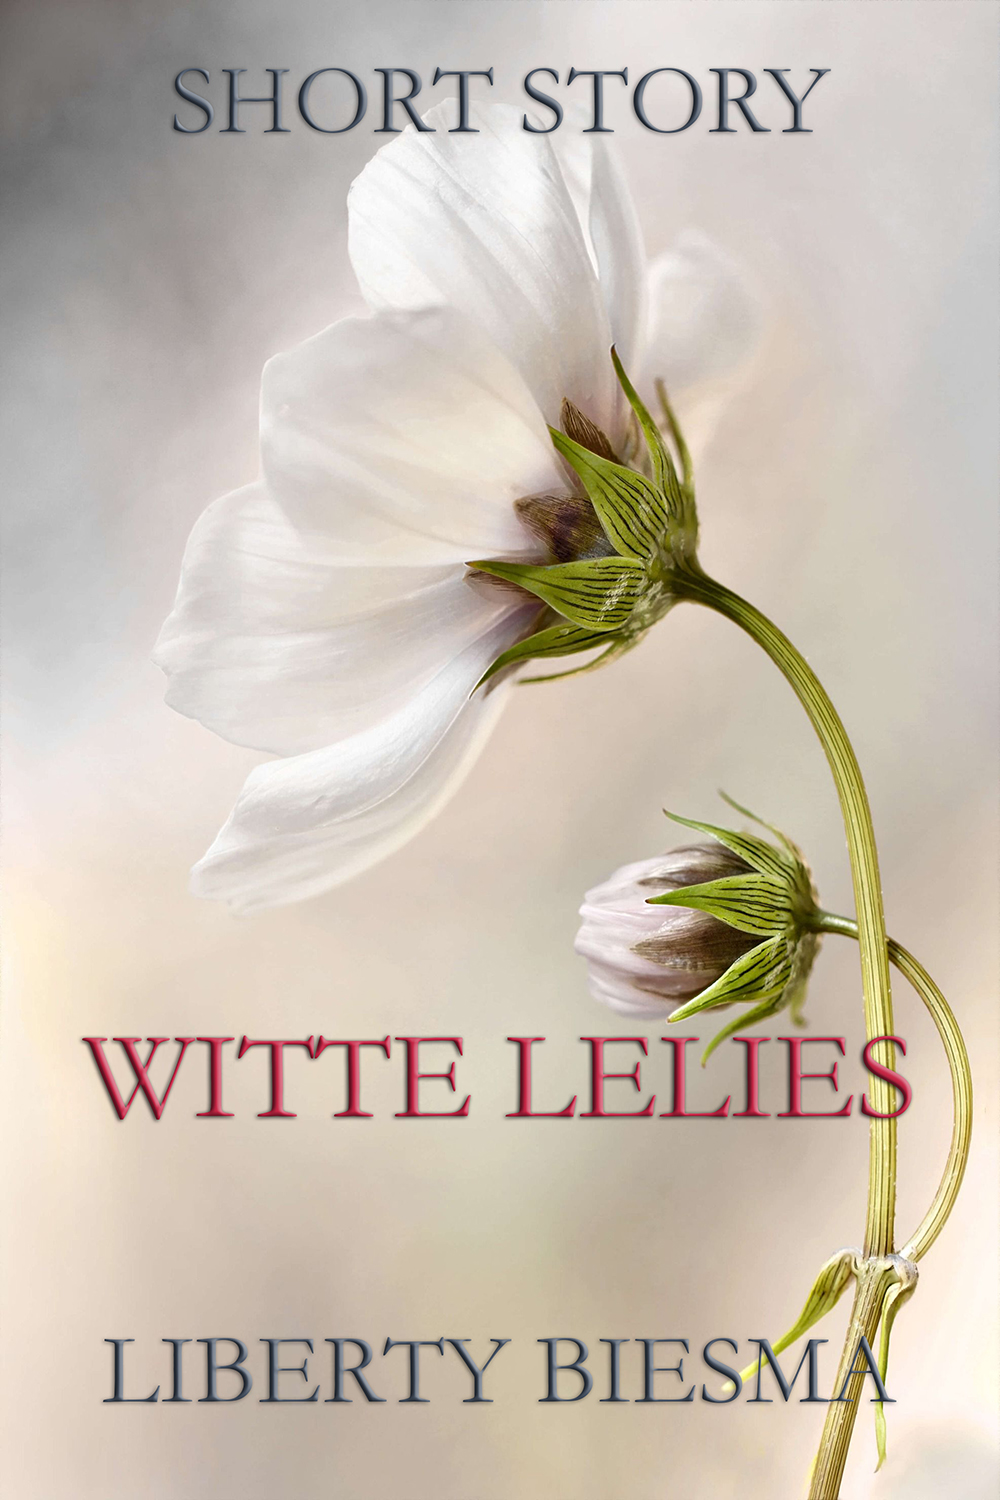 Witte Lelies - A short story by Liberty Biesma